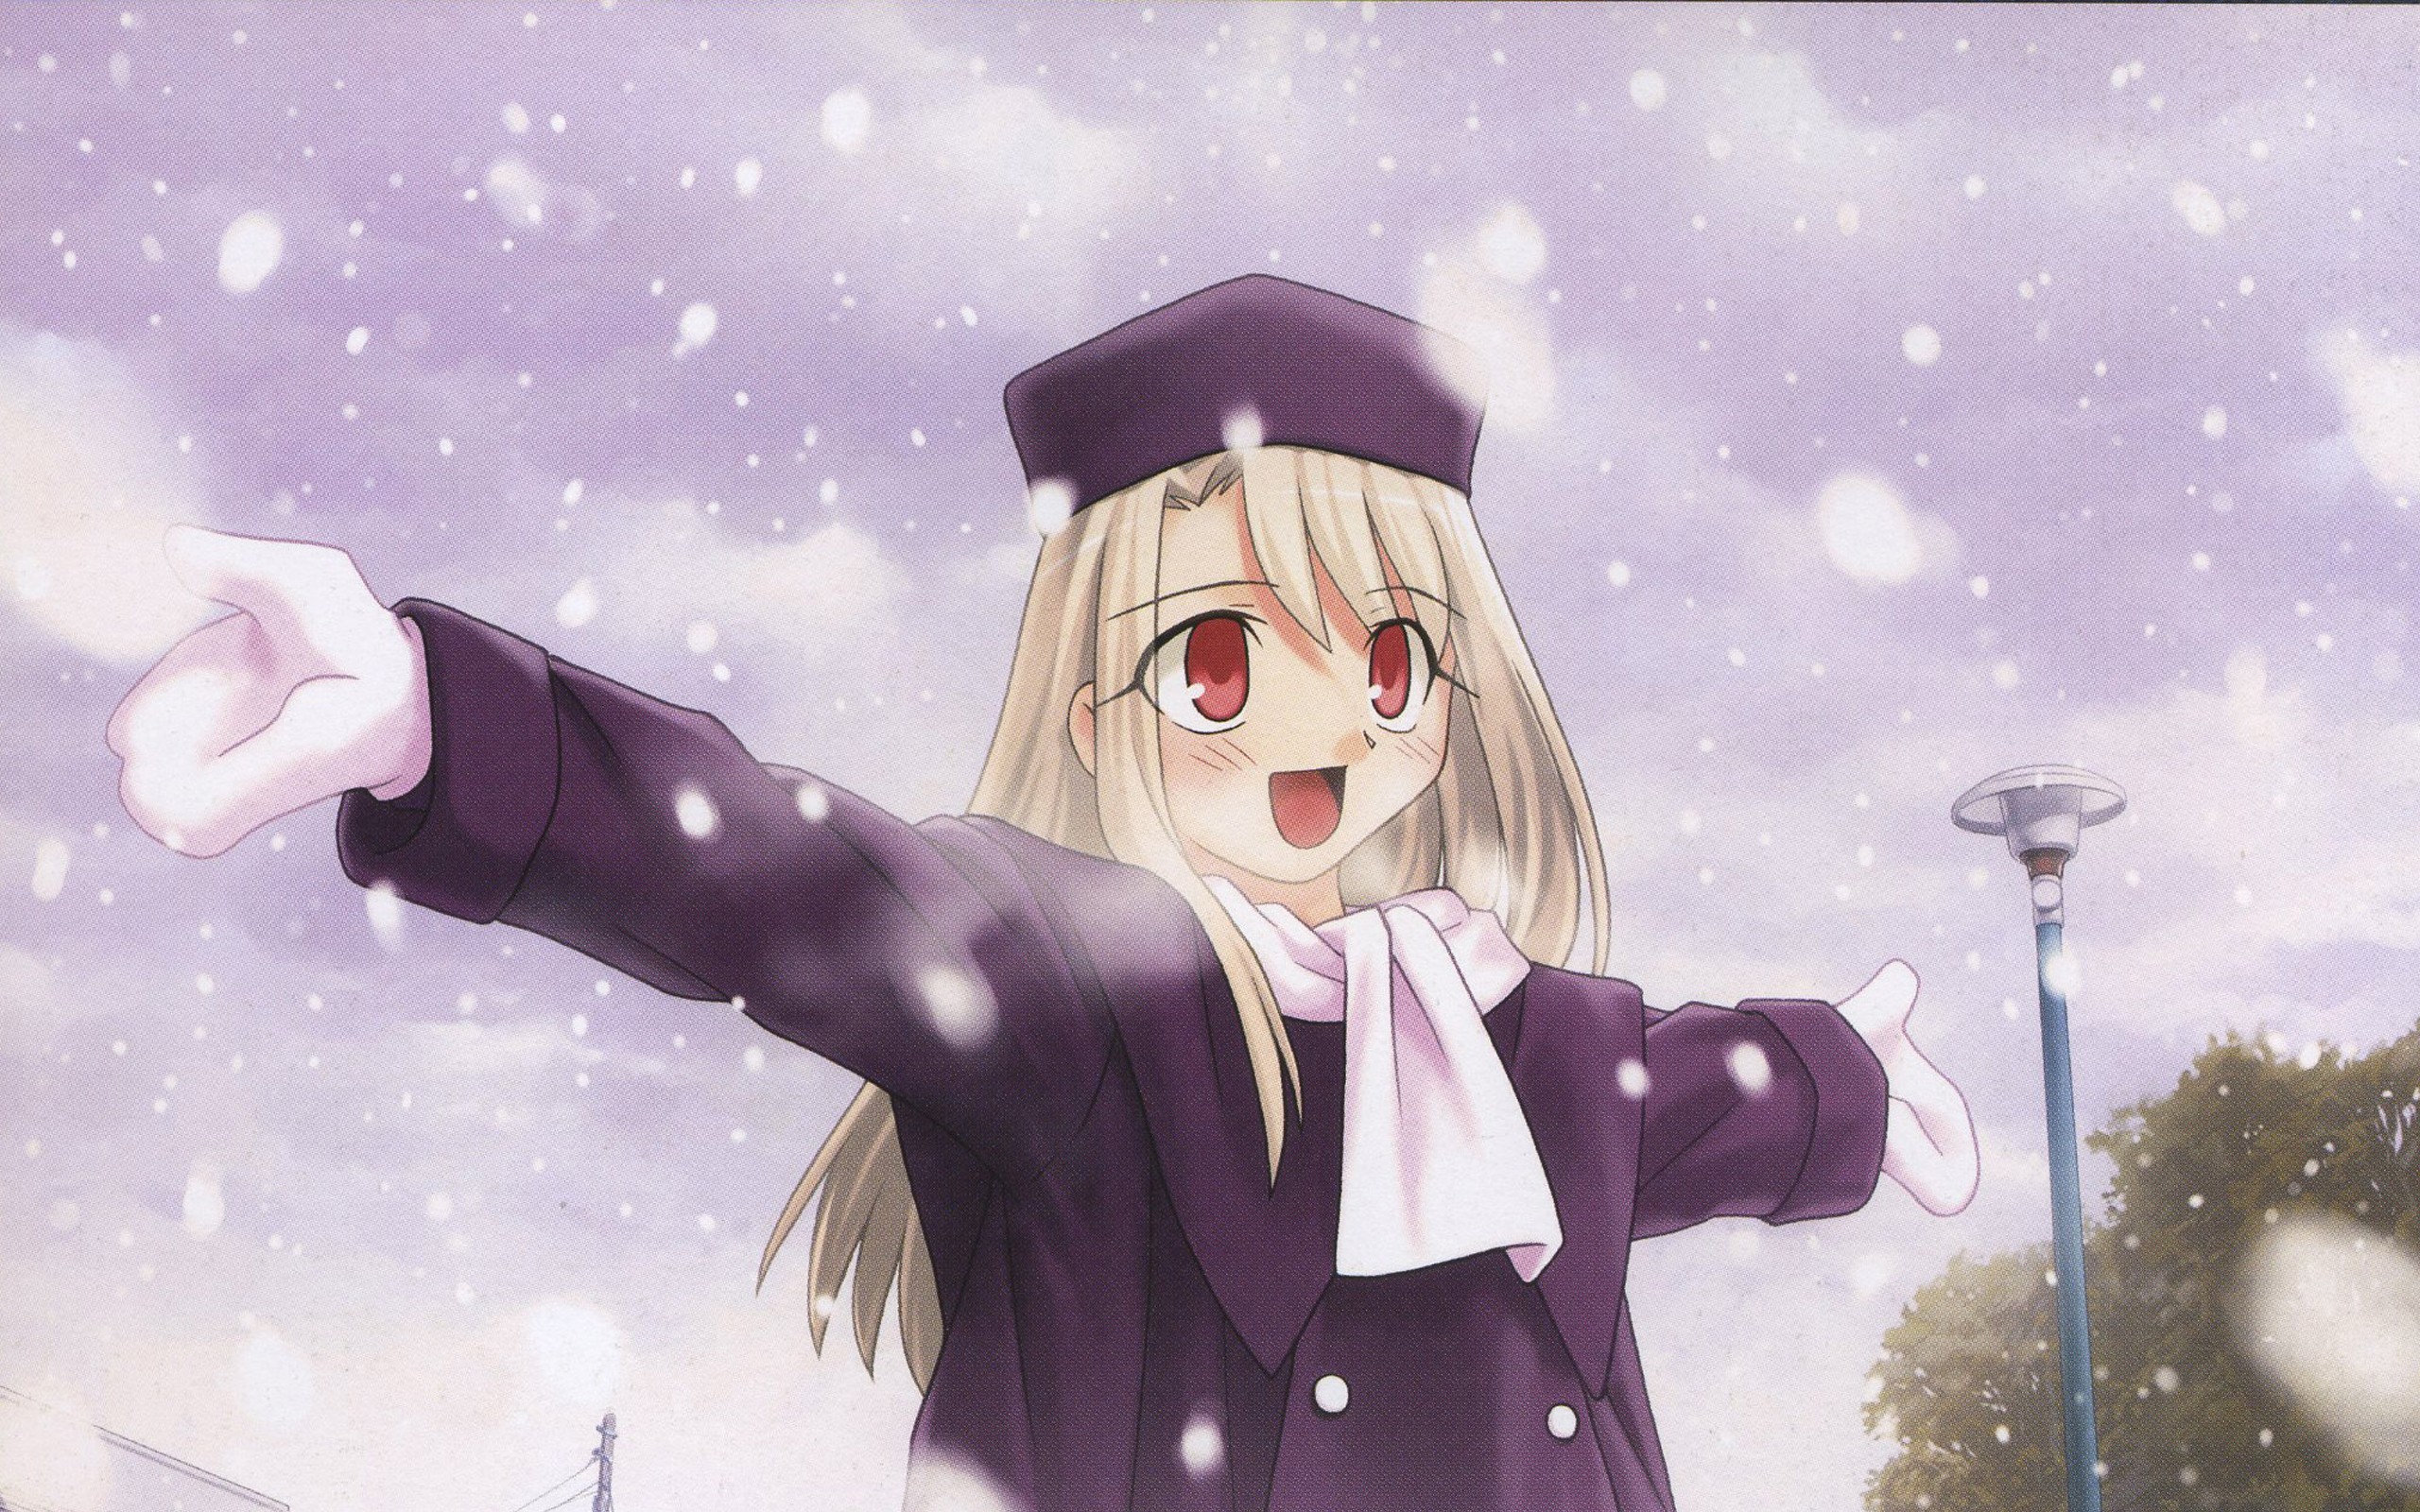 Anime 2560x1600 Fate series Illyasviel von Einzbern anime girls anime red eyes snow snowflakes winter open mouth hat women with hats blonde women outdoors